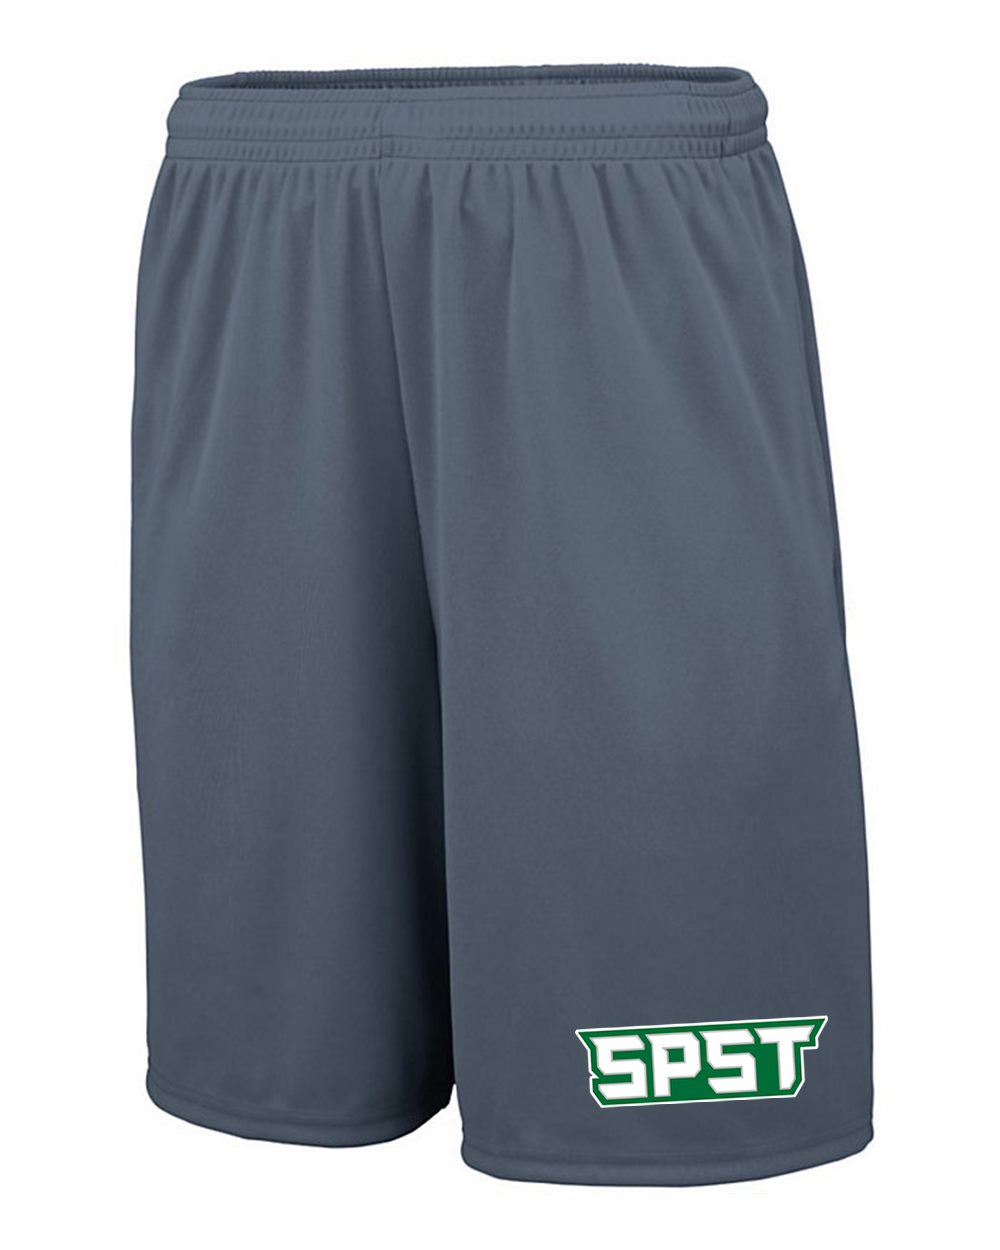 SPST Youth Training Shorts with Pocket - 1429